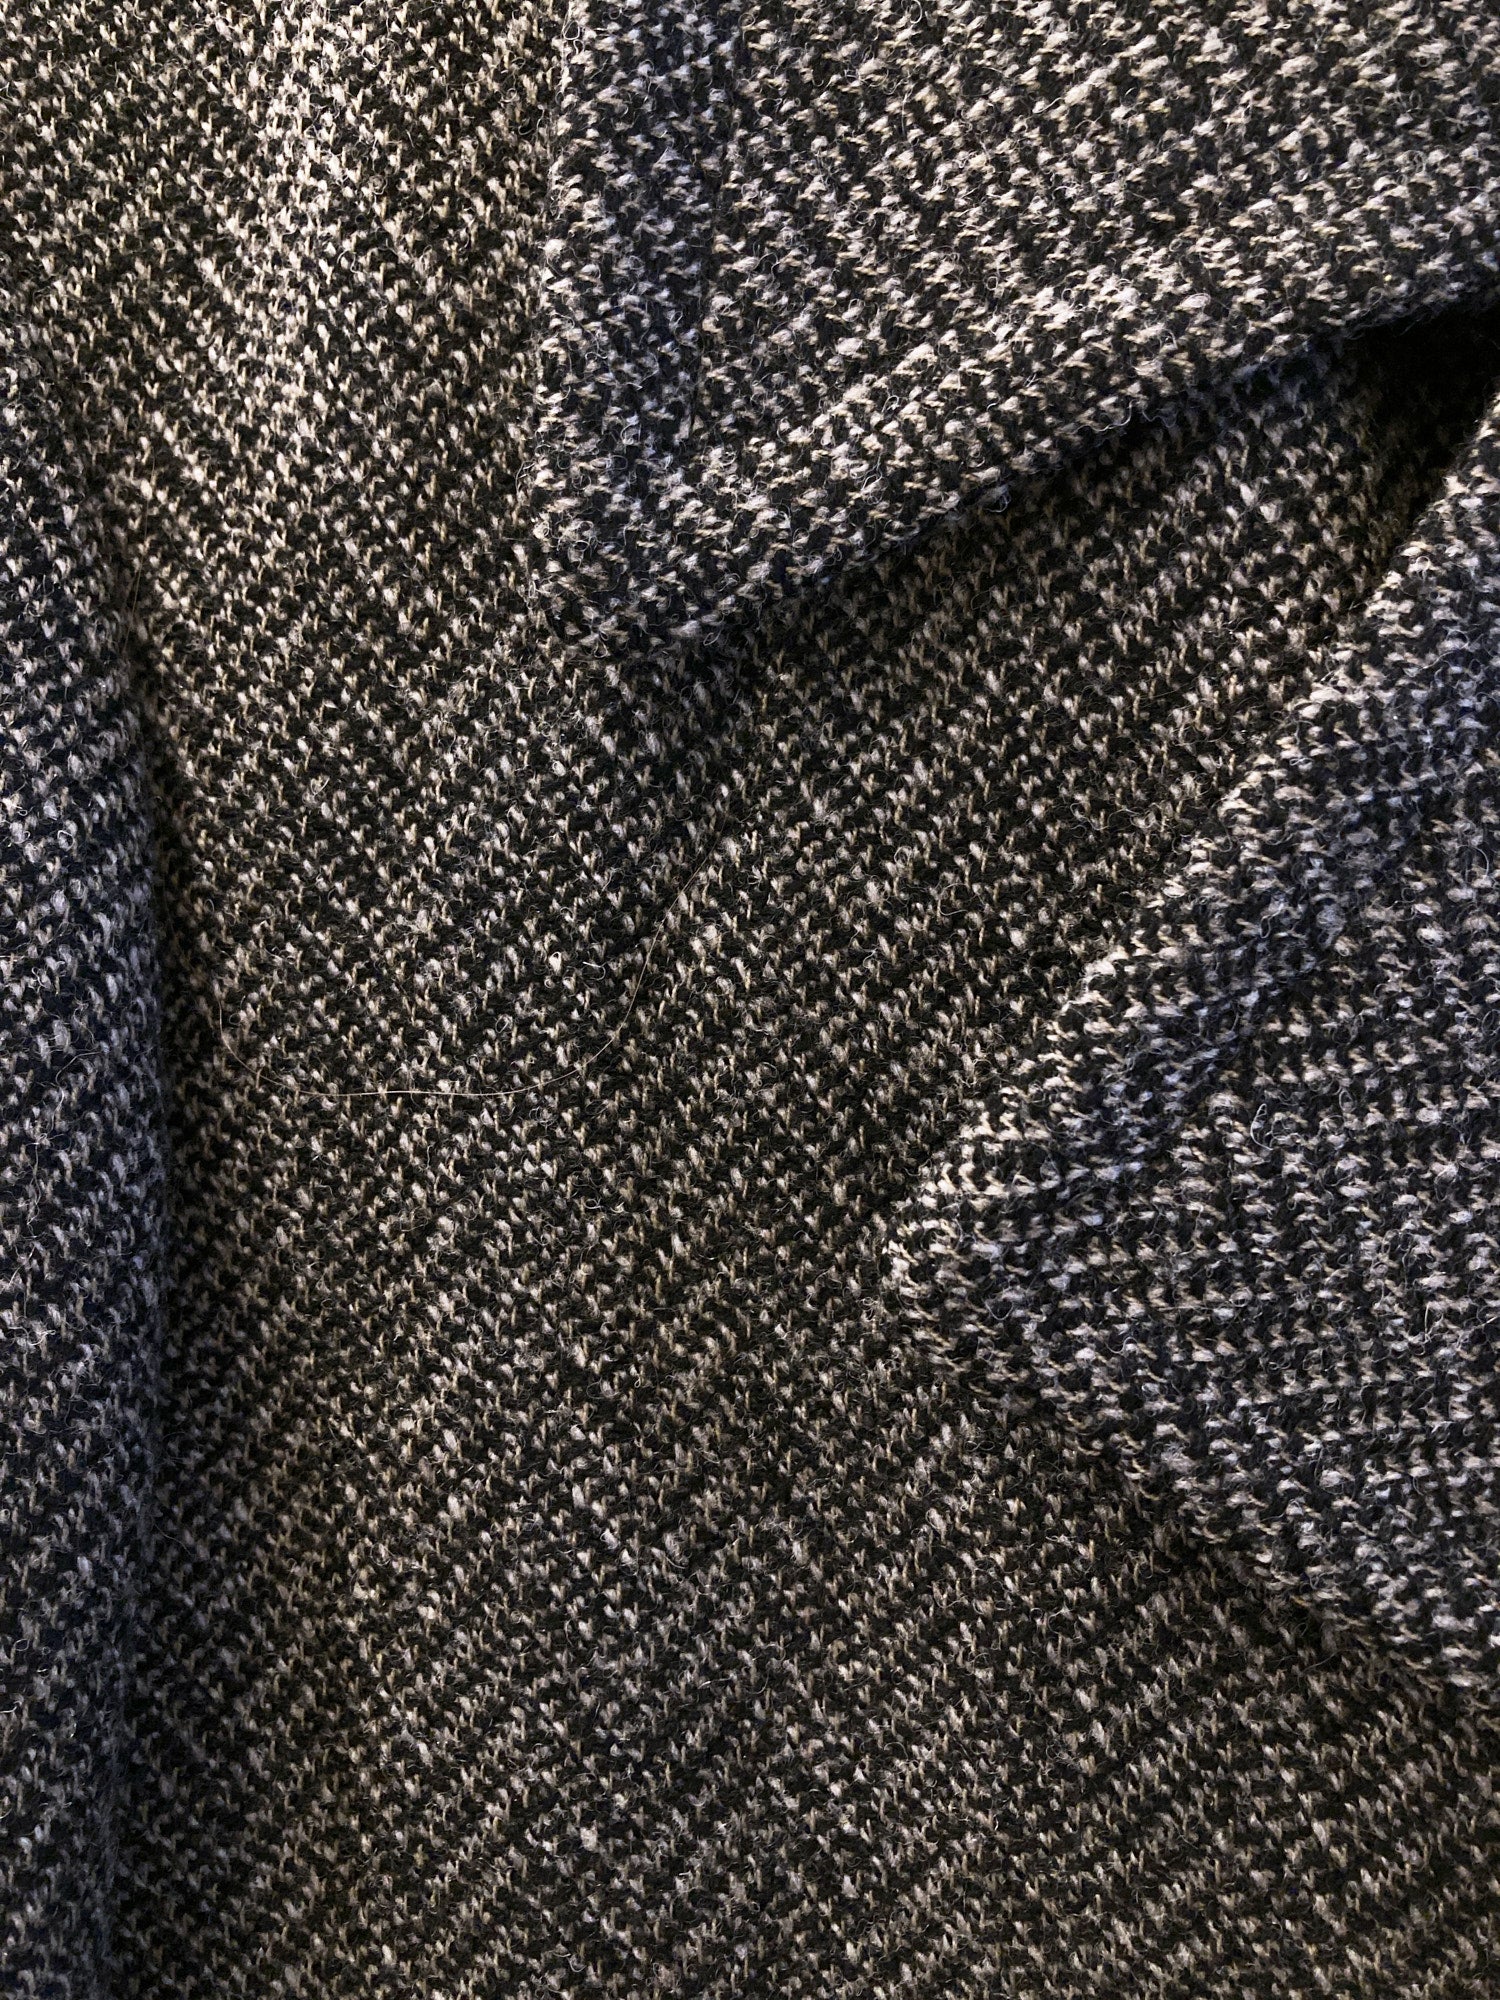 Jean Colonna grey brown herringbone wool poly pea coat - size 46